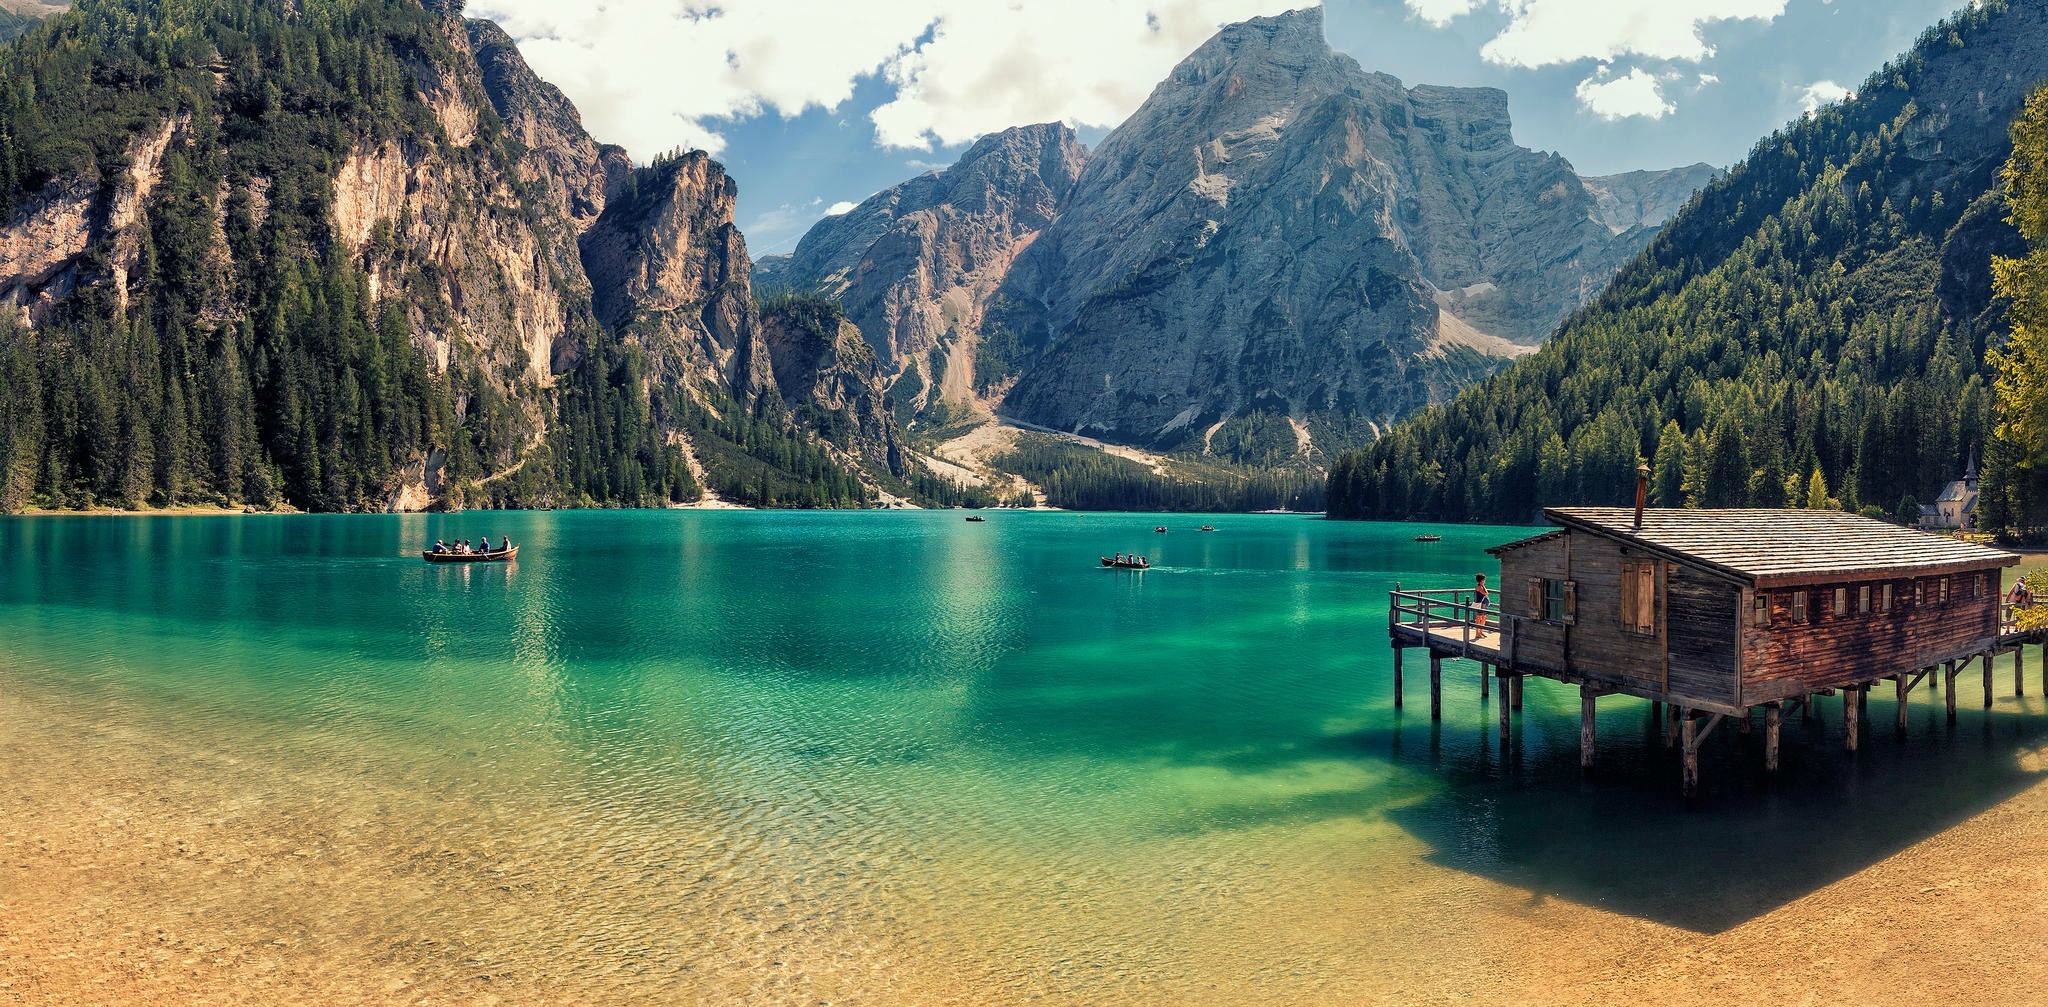 #4543313 #water, #mountains, #nature, #landscape, #lake, - Pragser Wildsee , HD Wallpaper & Backgrounds